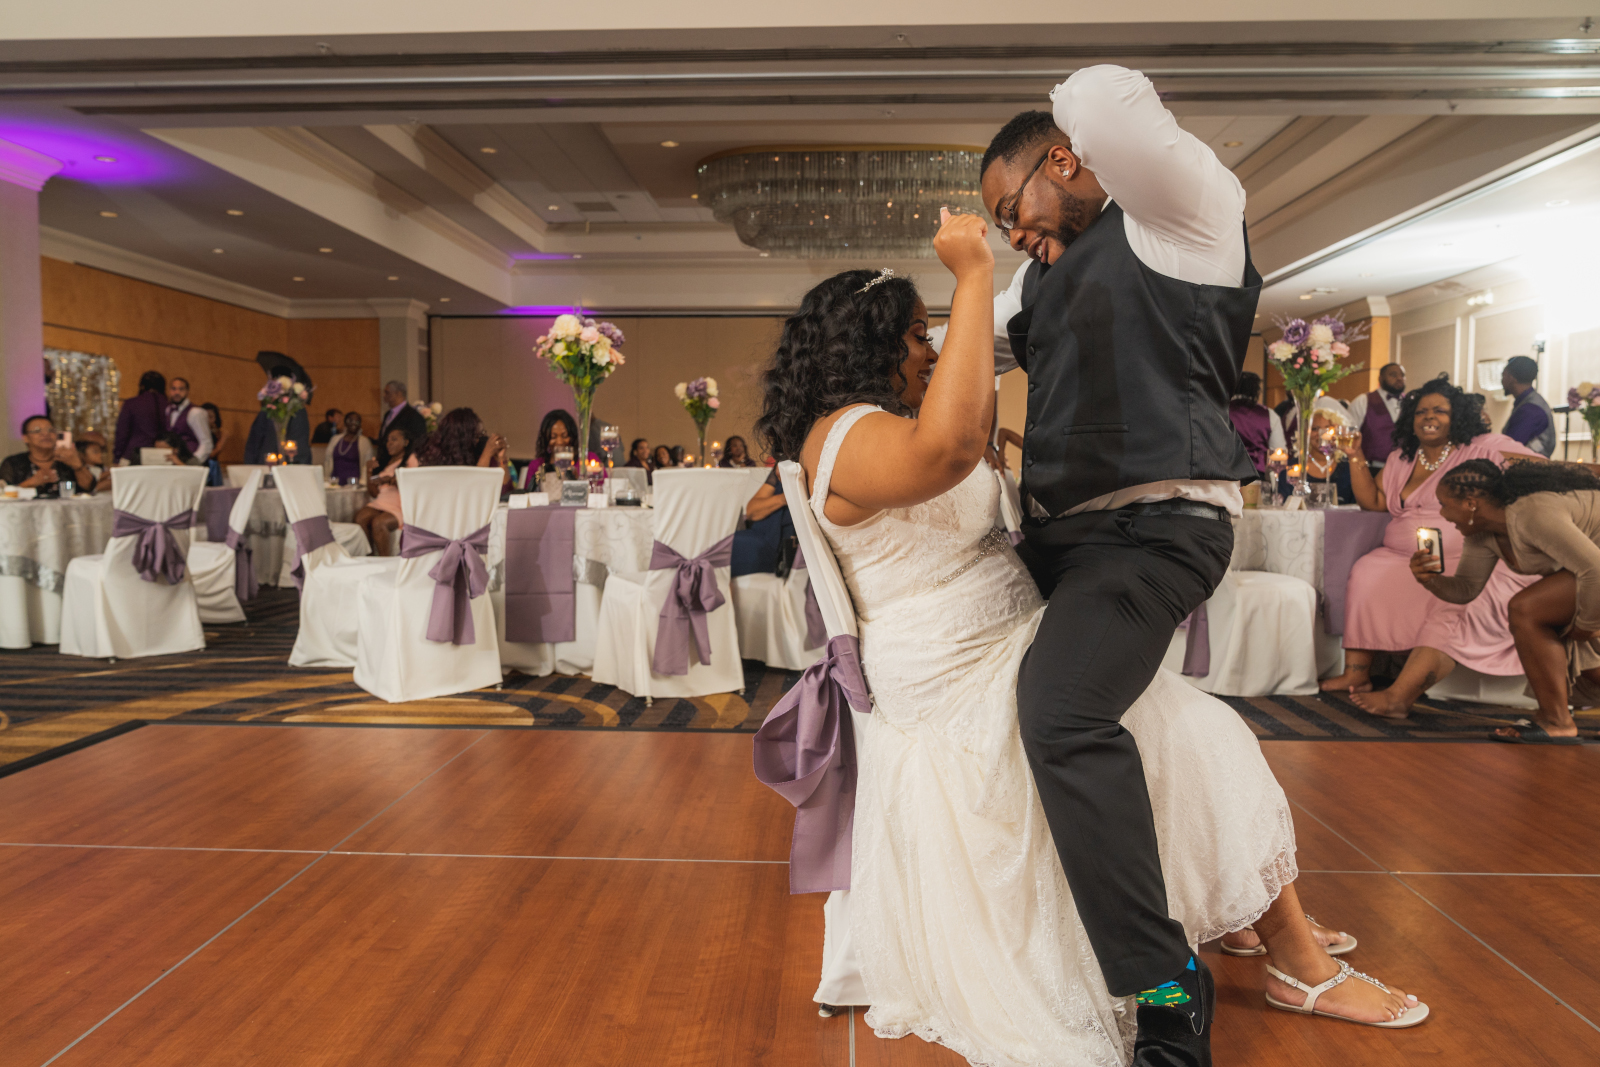 Groom dances on bride, garter removal, fun wedding photo, bride cheering, funny, African American bride, African American wedding, romantic wedding reception at Hilton Akron/Fairlawn